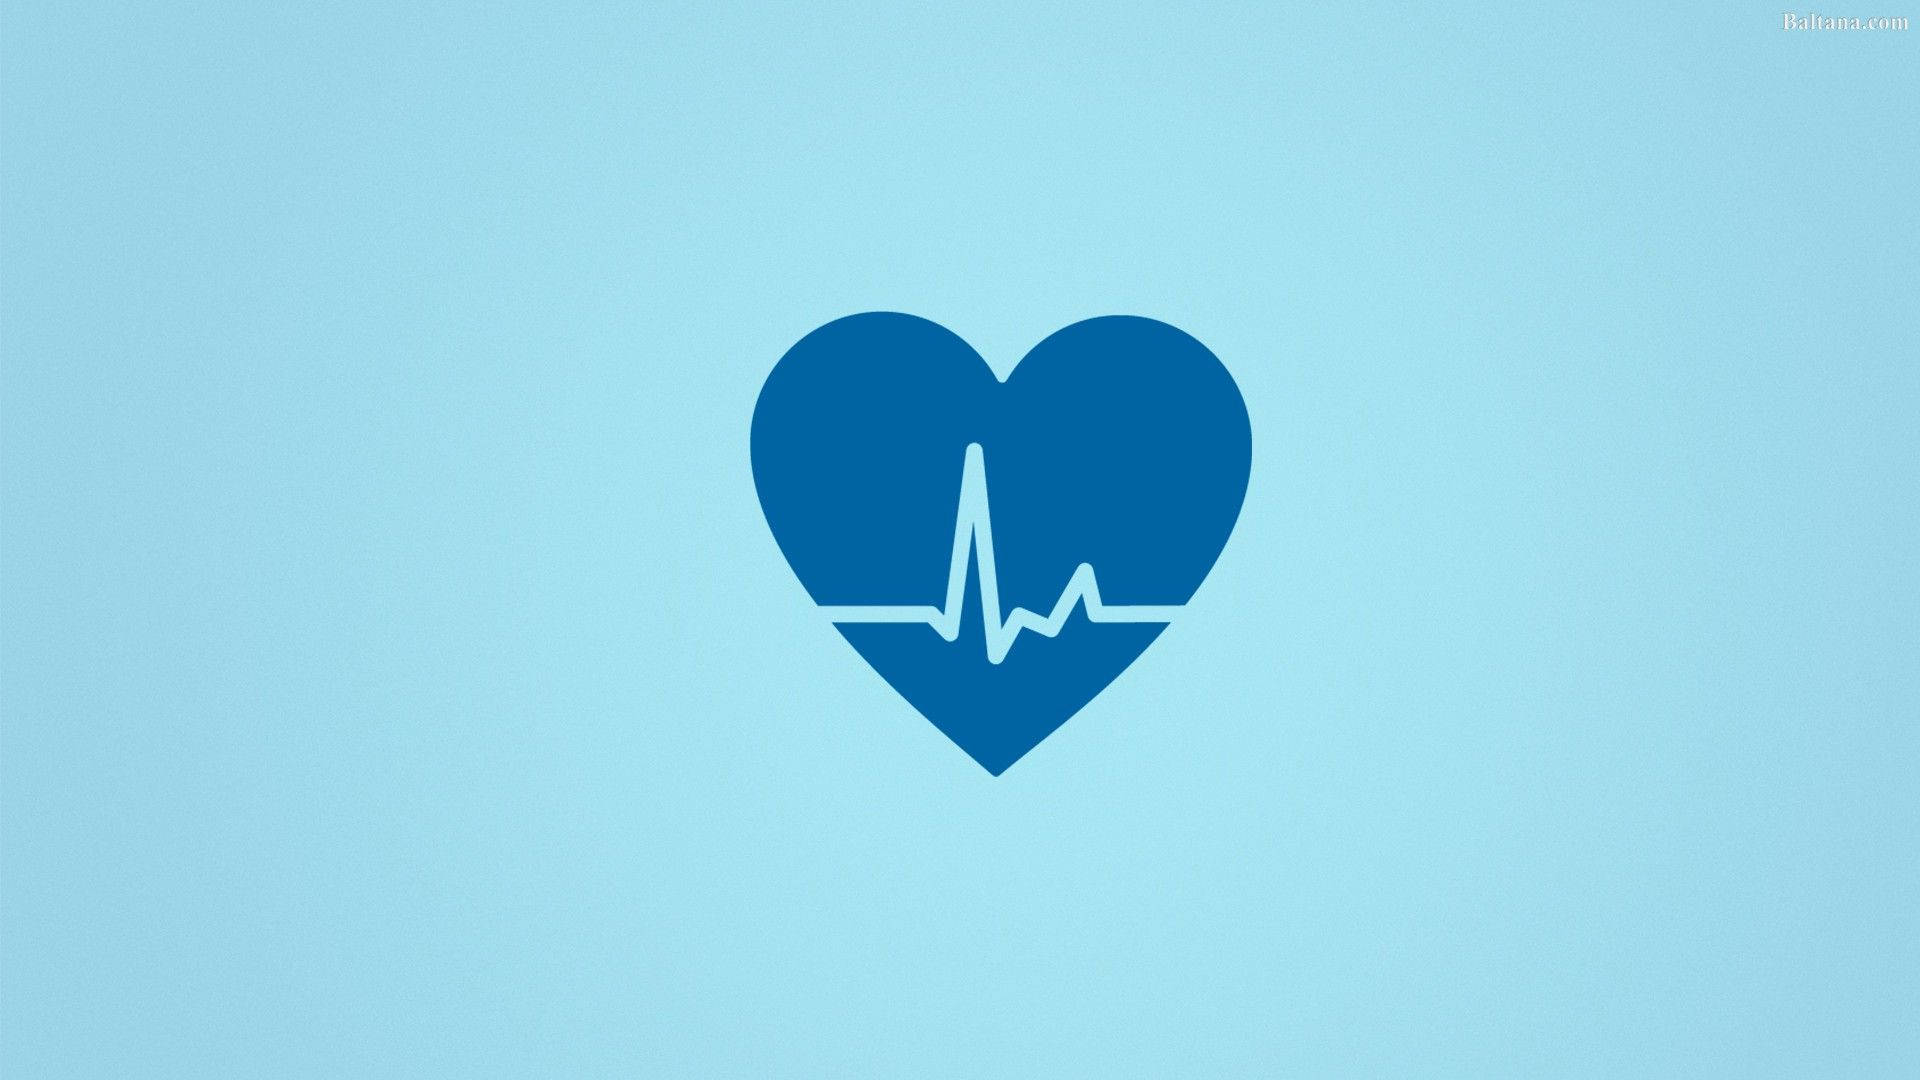 Vibrant Blue Heartbeat Illustration Background